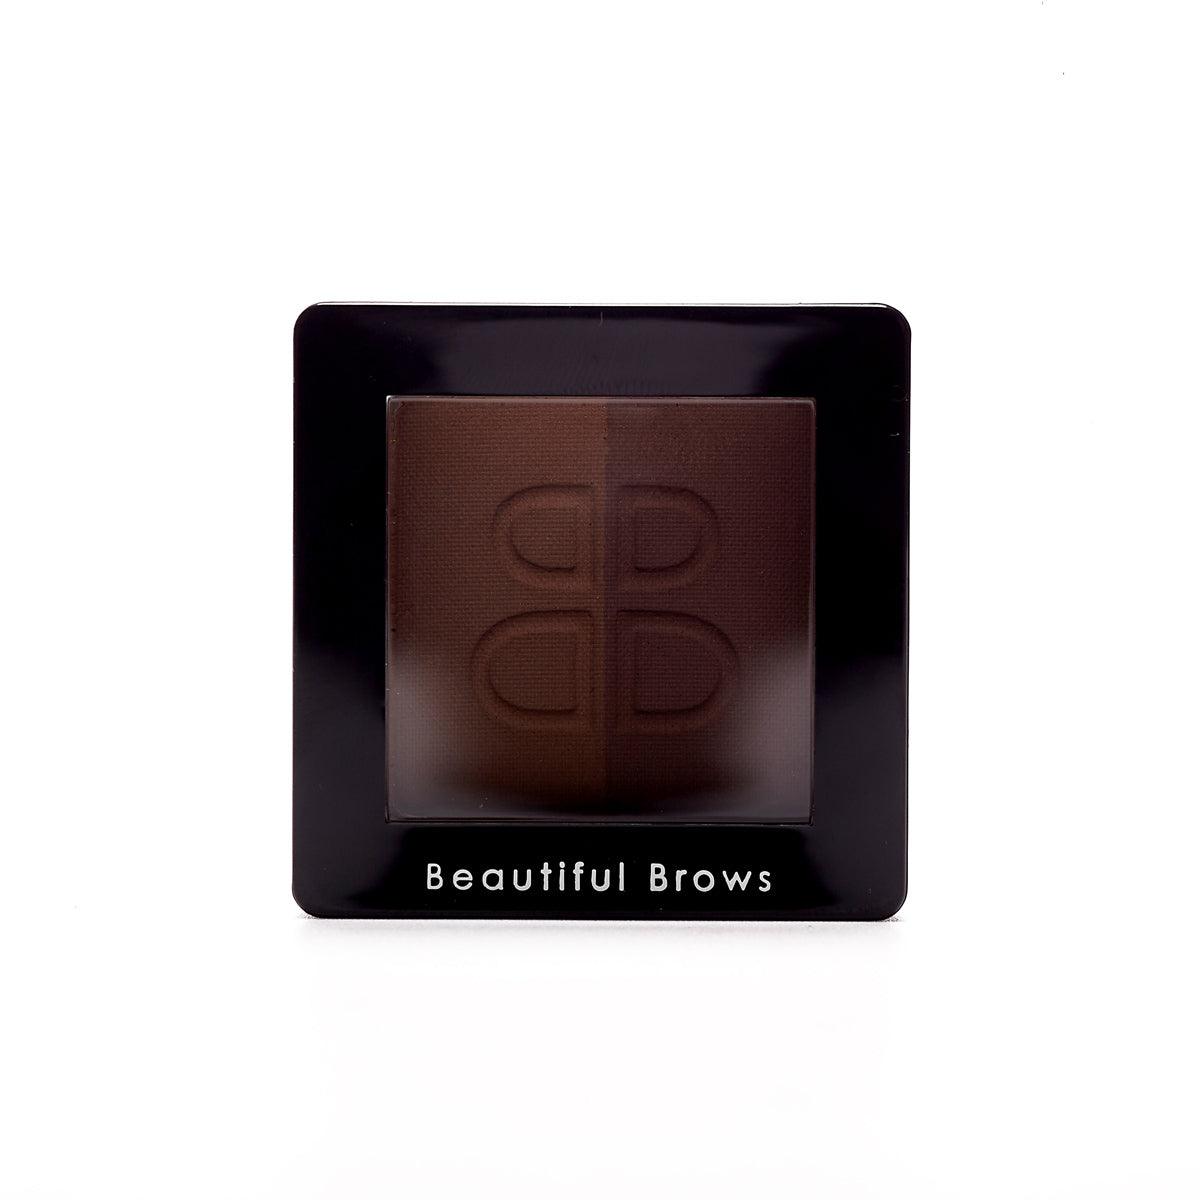 Duo Eyebrow Powder - Dark Brown / Chocolate